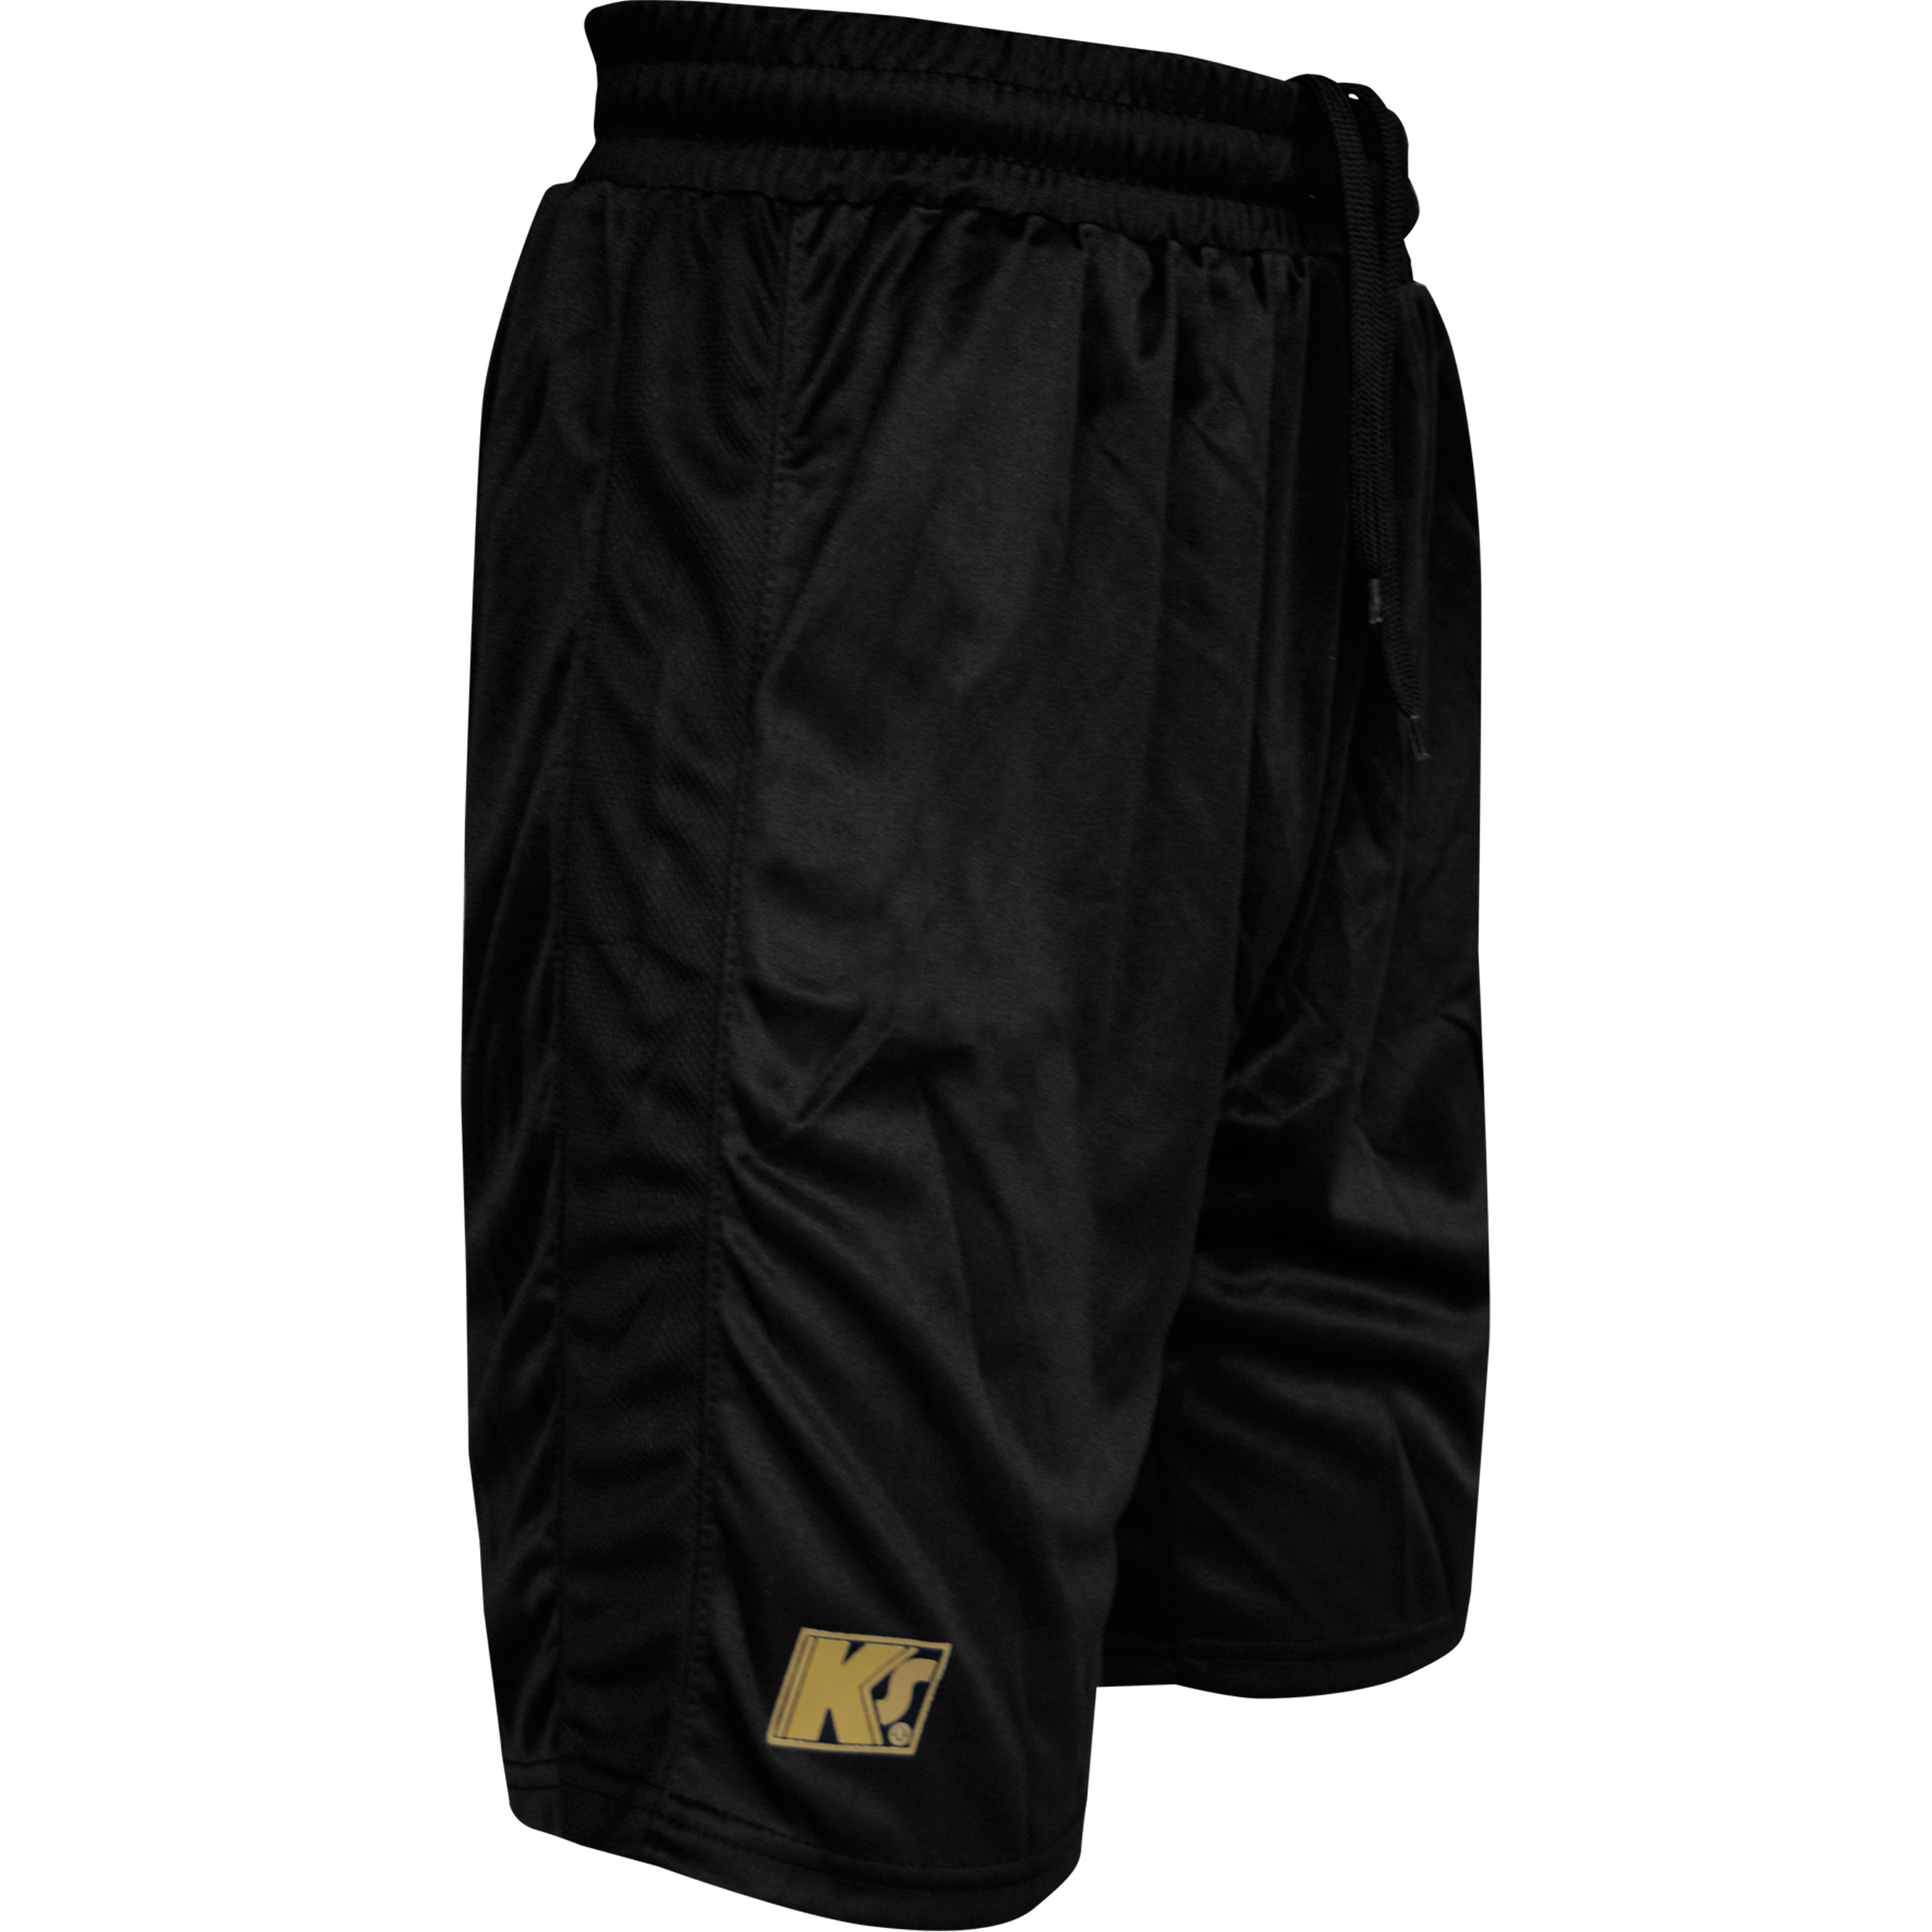 KEEPERsport GKSix Shorts (black/gold)